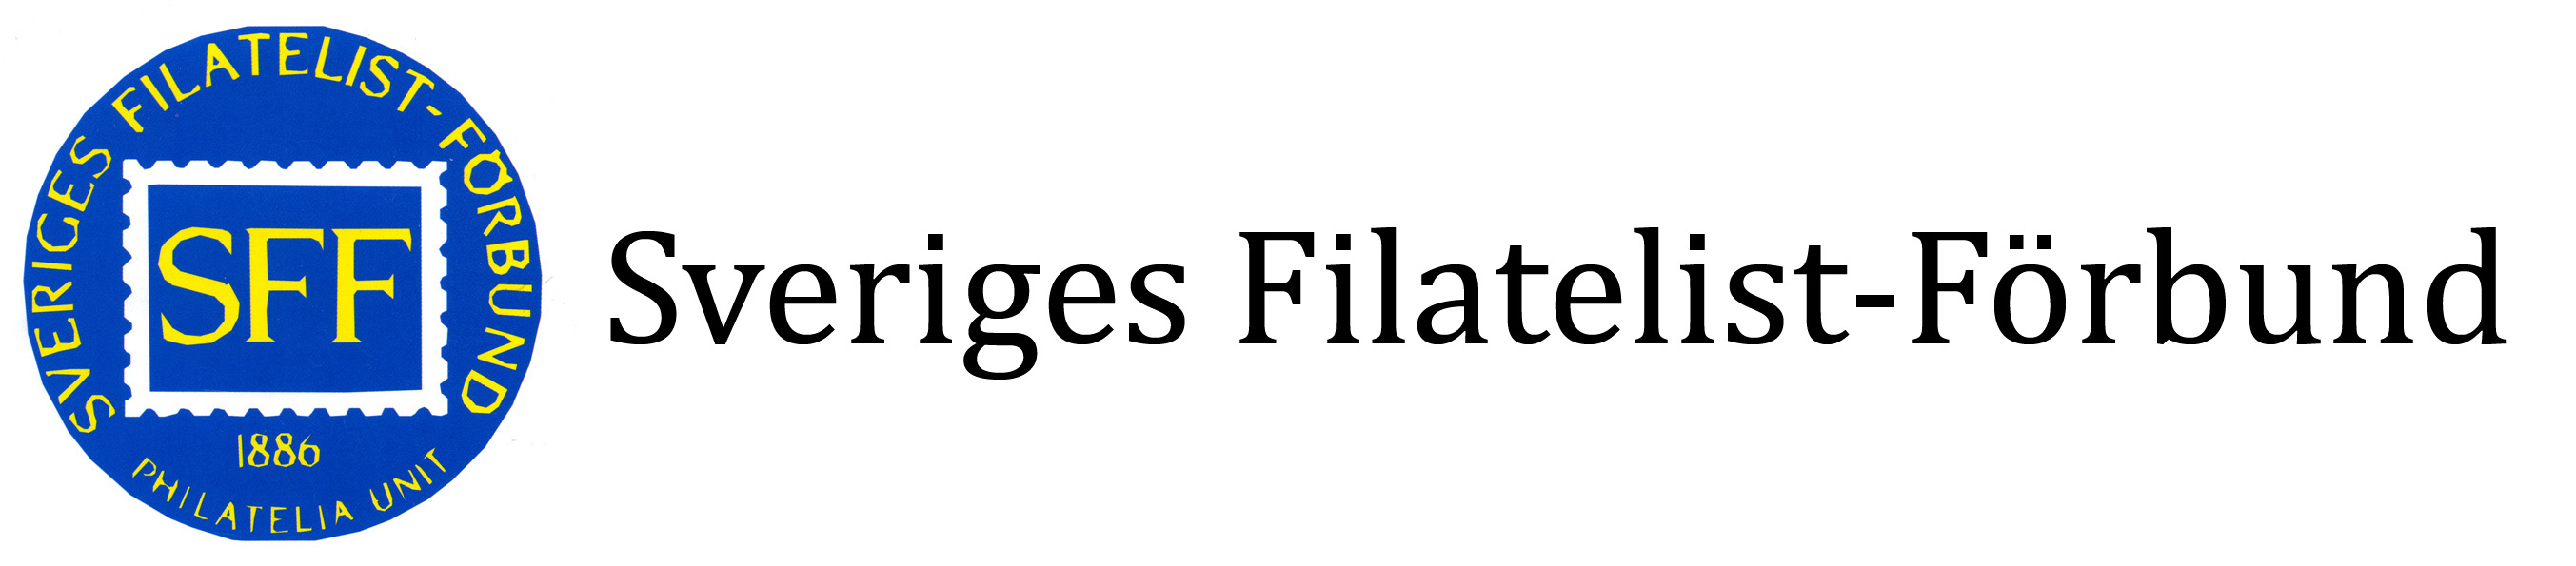 Sveriges Filiatest Förbund